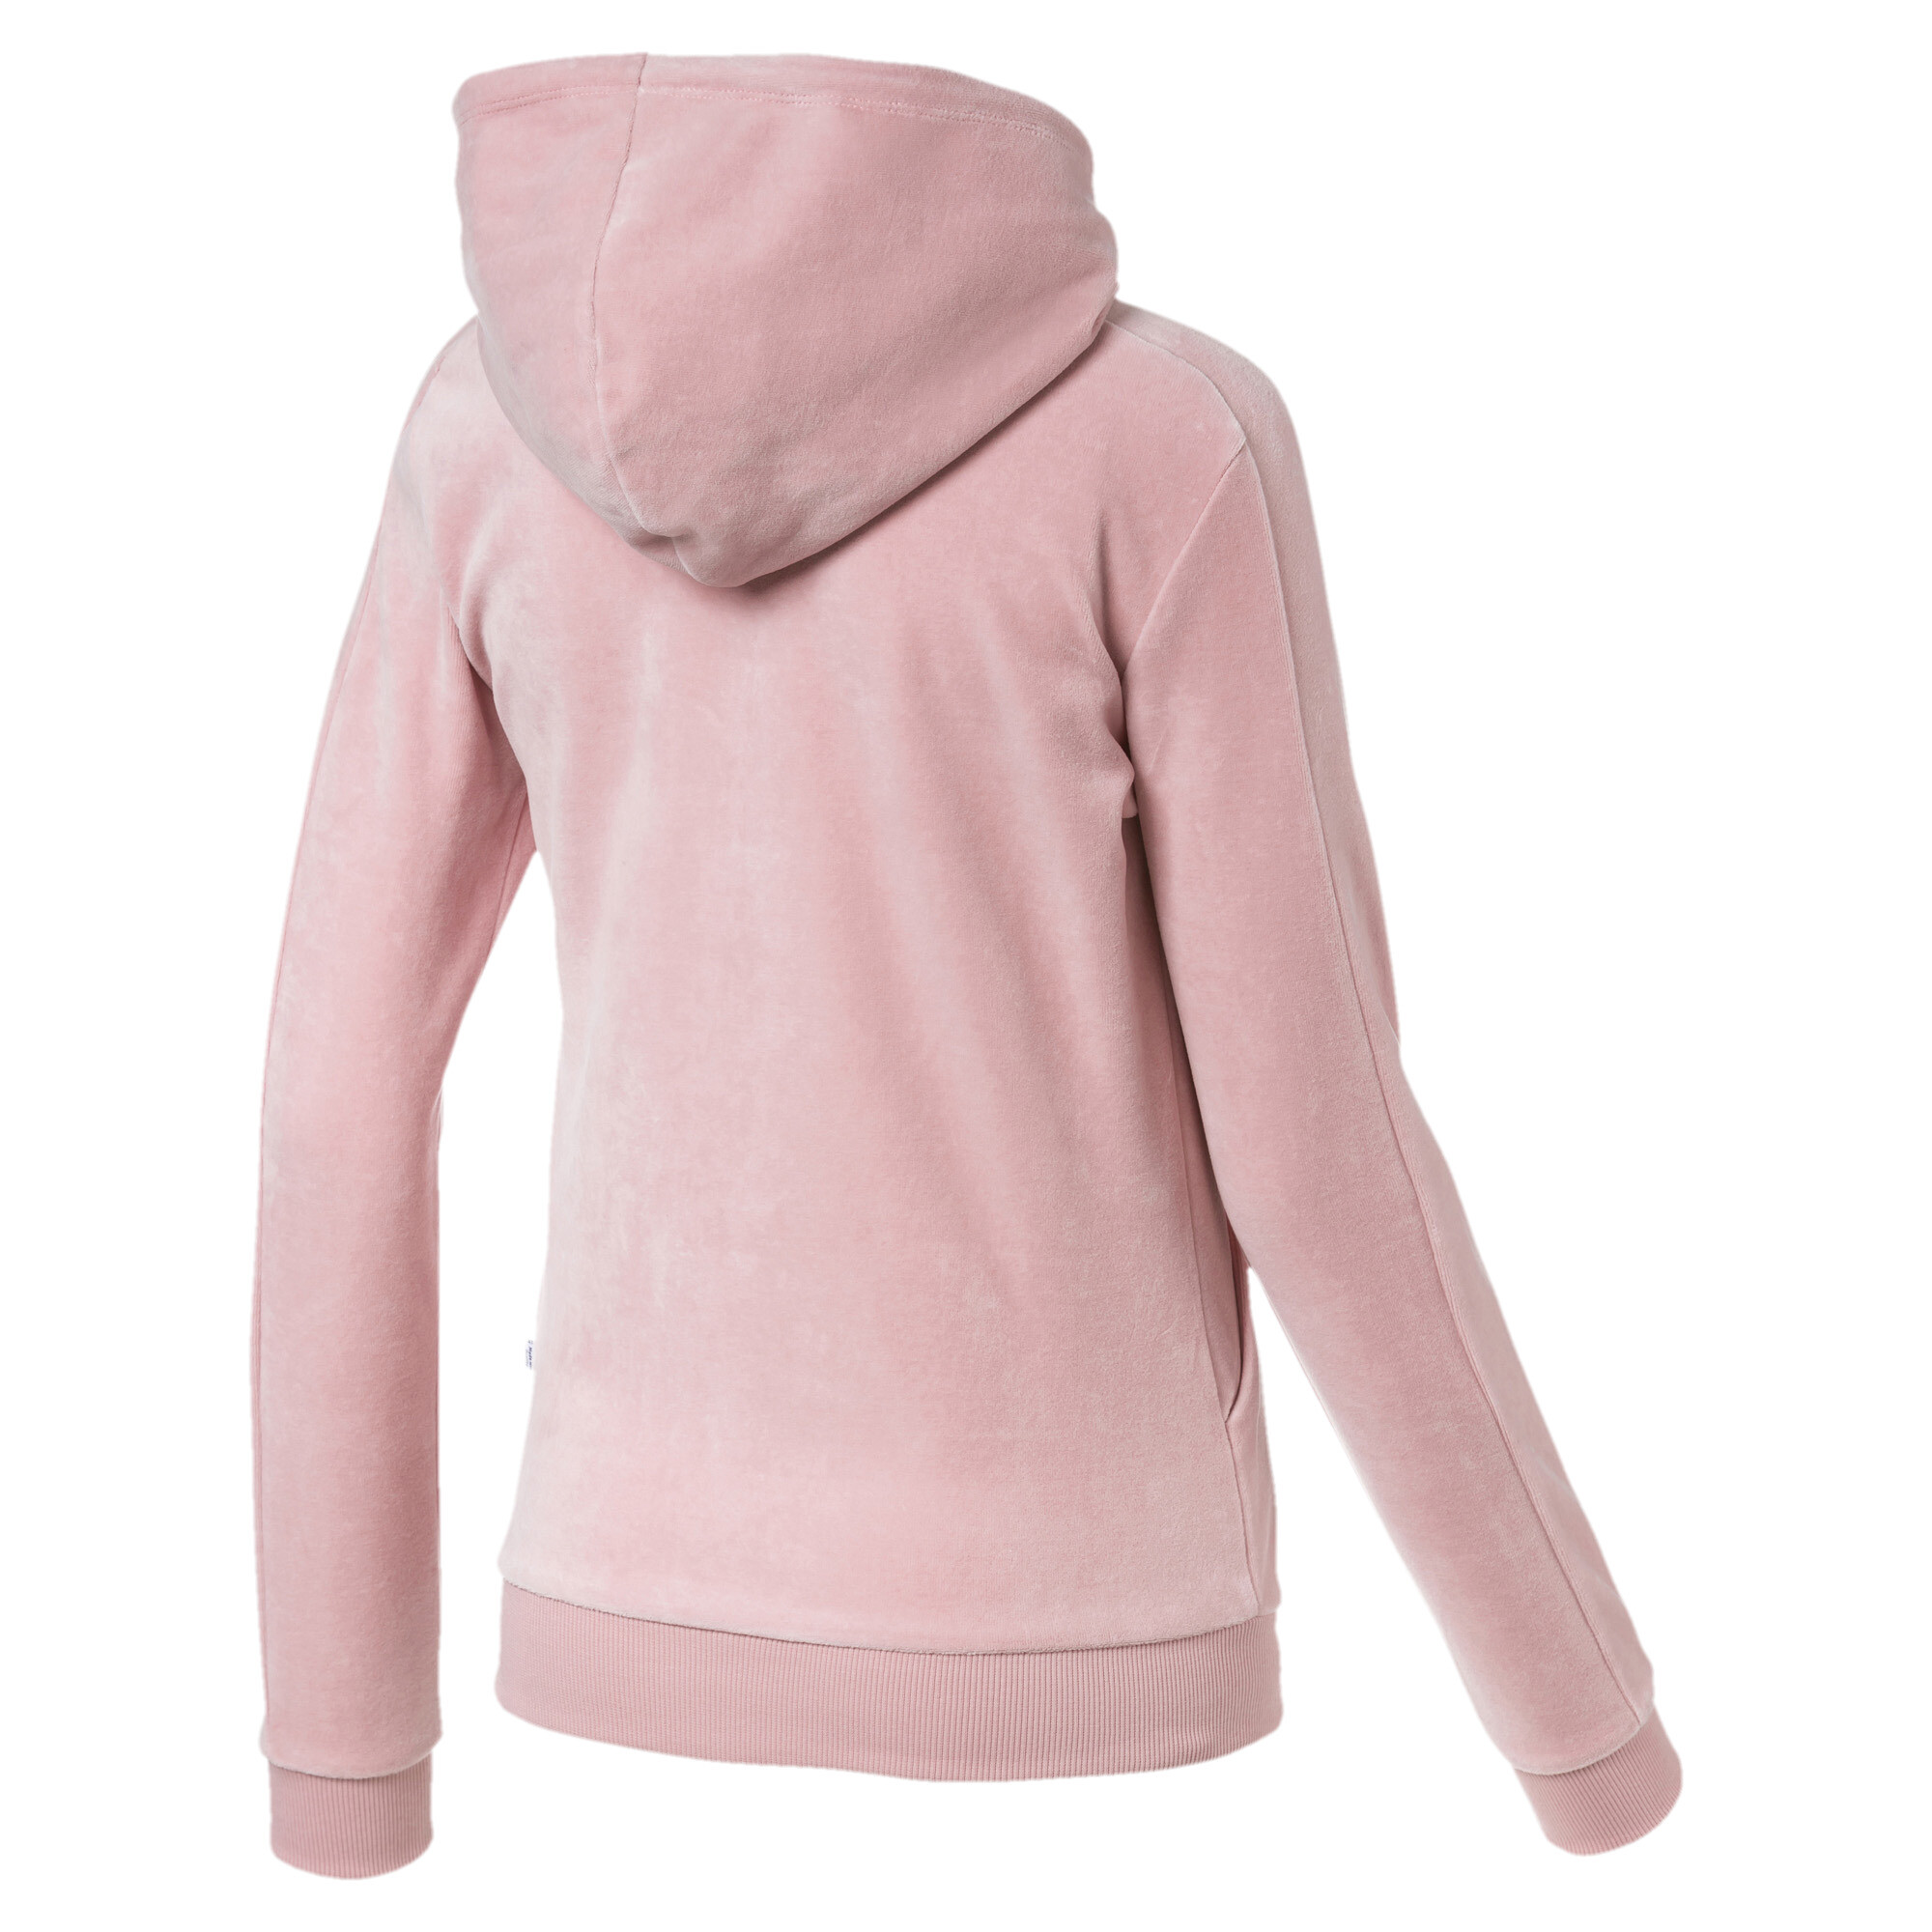 PUMA Essentials+ Velour Hooded Jacket Women Sweat Basics | eBay